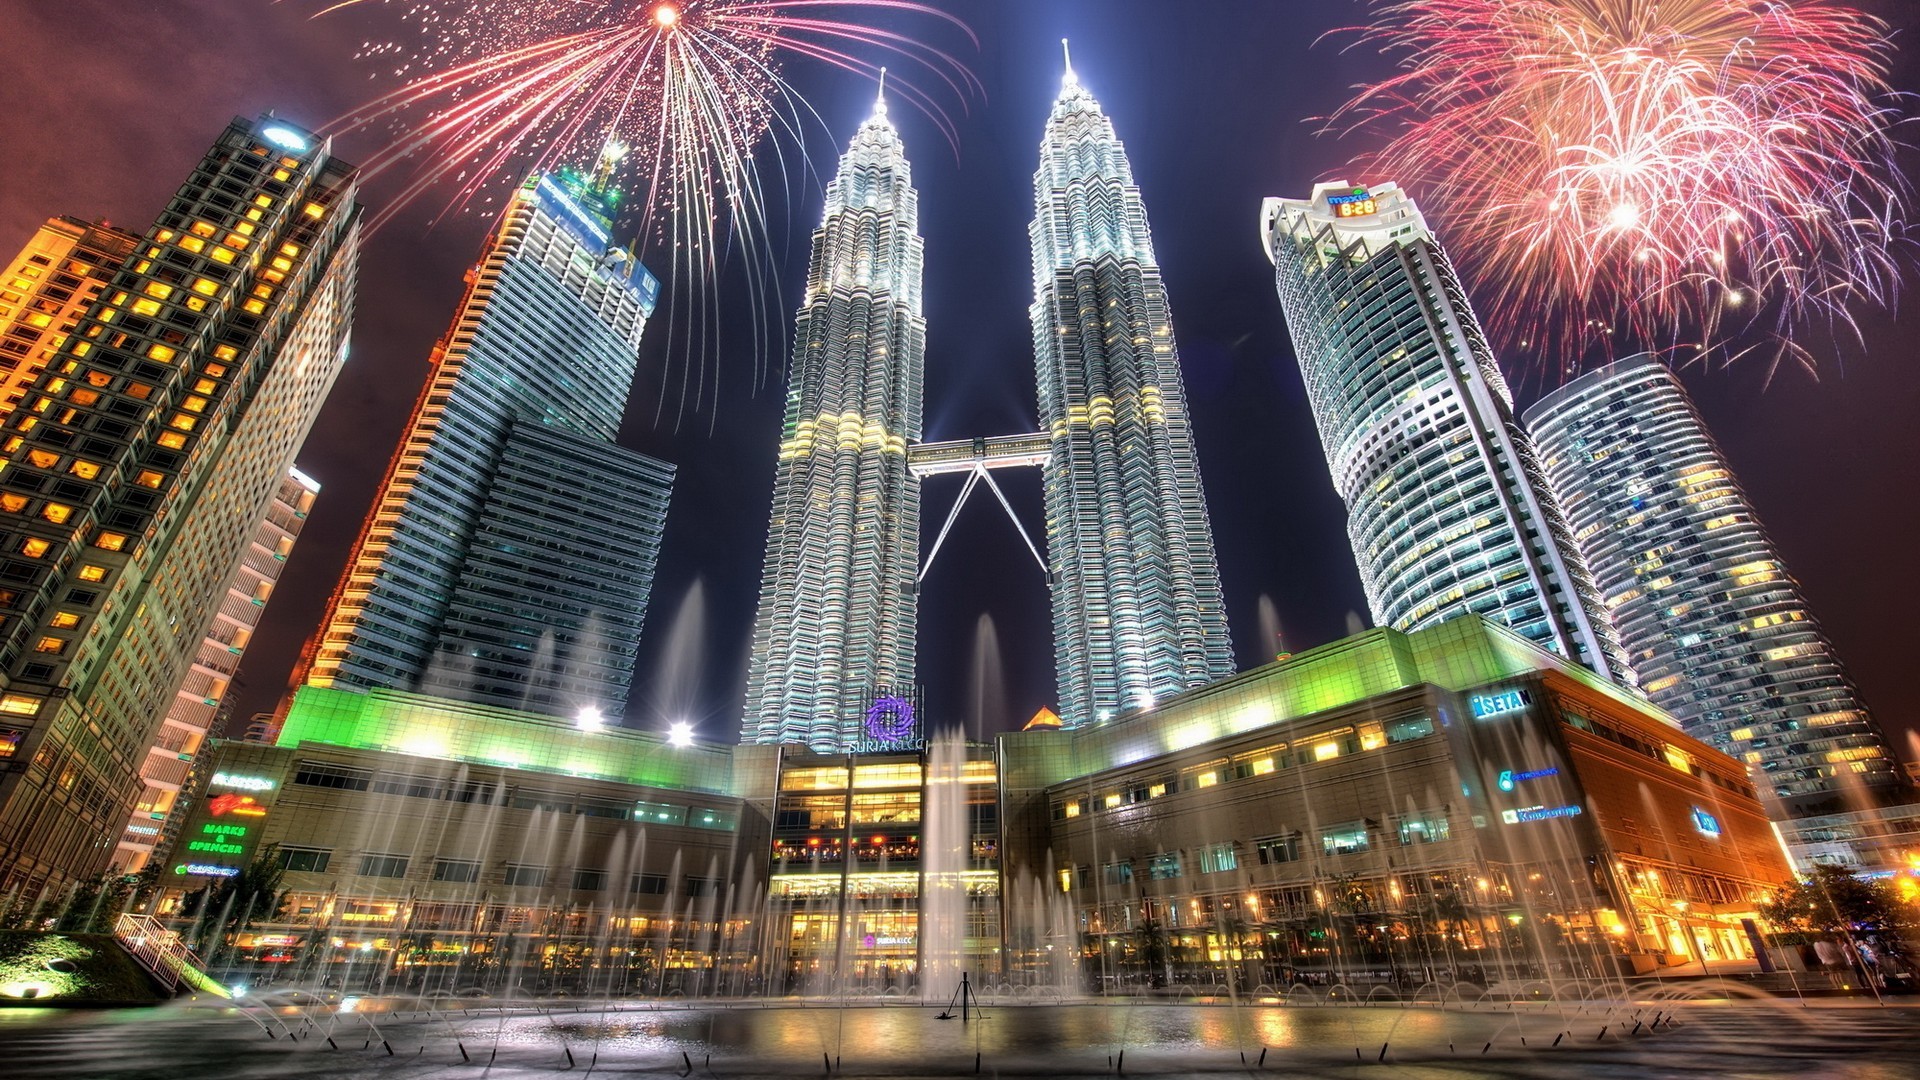 General 1920x1080 cityscape city building HDR lights Petronas Towers fireworks natural light digital lighting Kuala Lumpur Malaysia Asia landmark